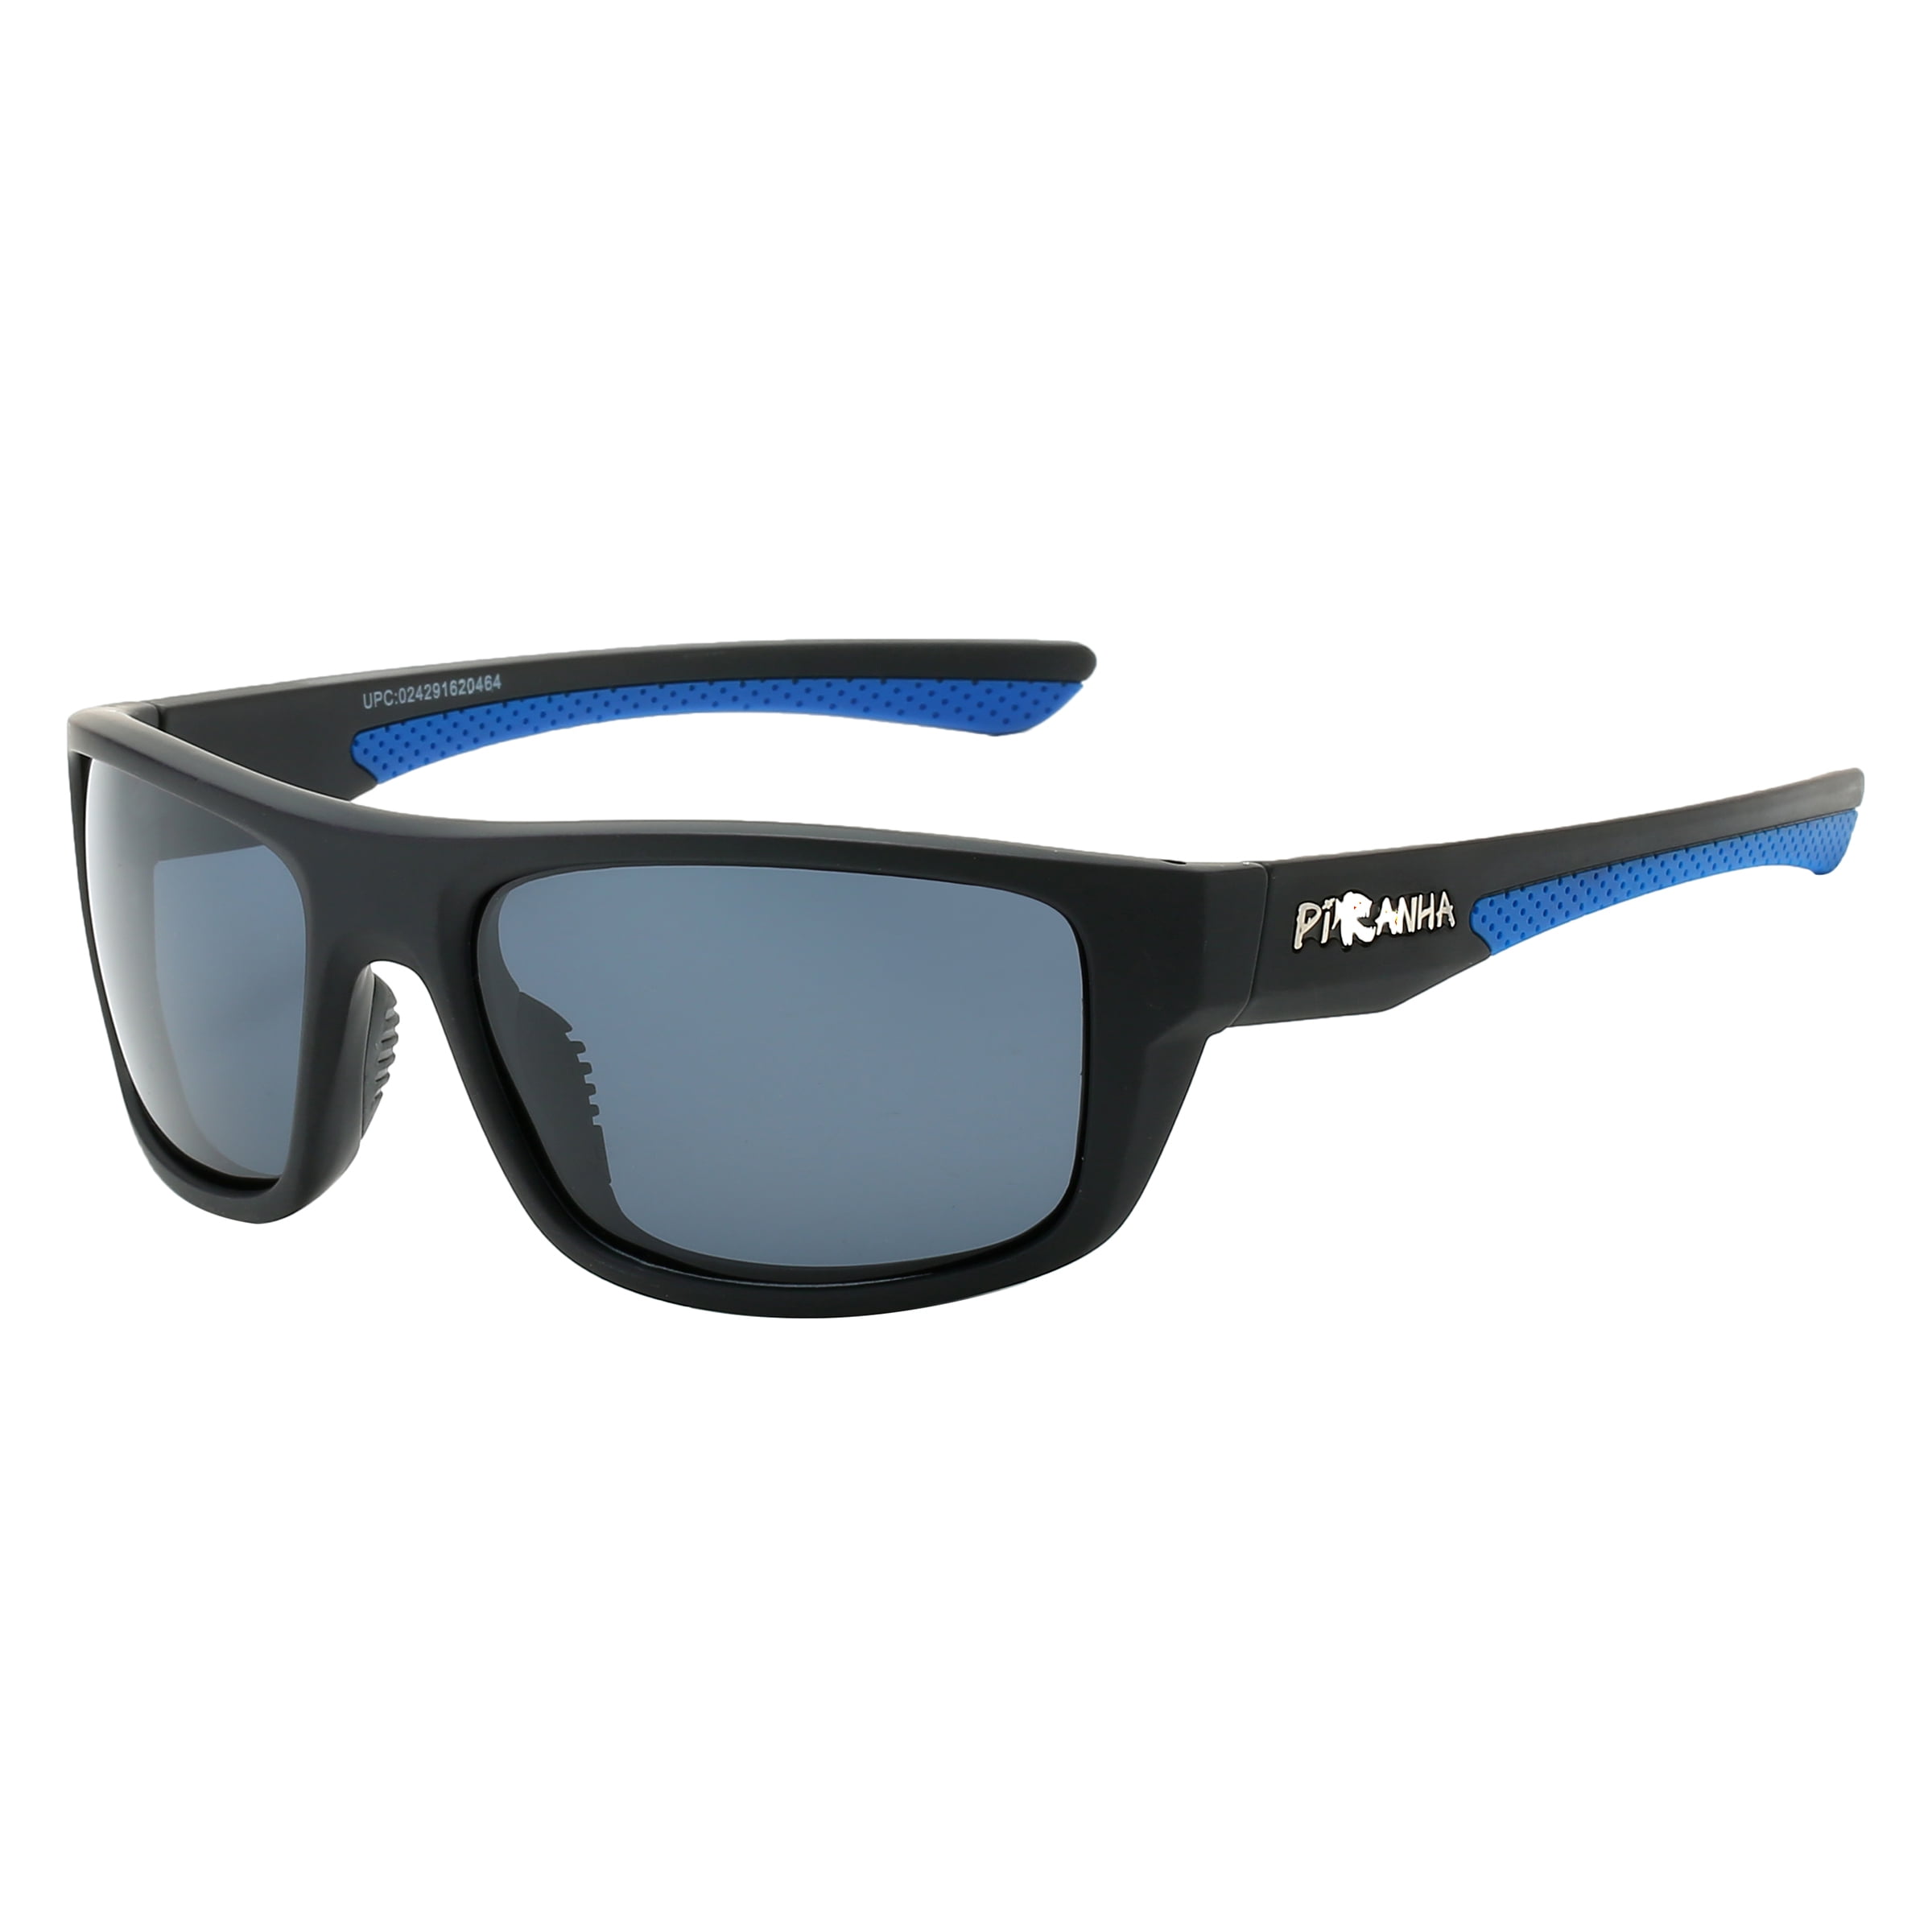 Piranha Eyewear Focus Square Sport Sunglasses with Smoke Blue Polarized Lens